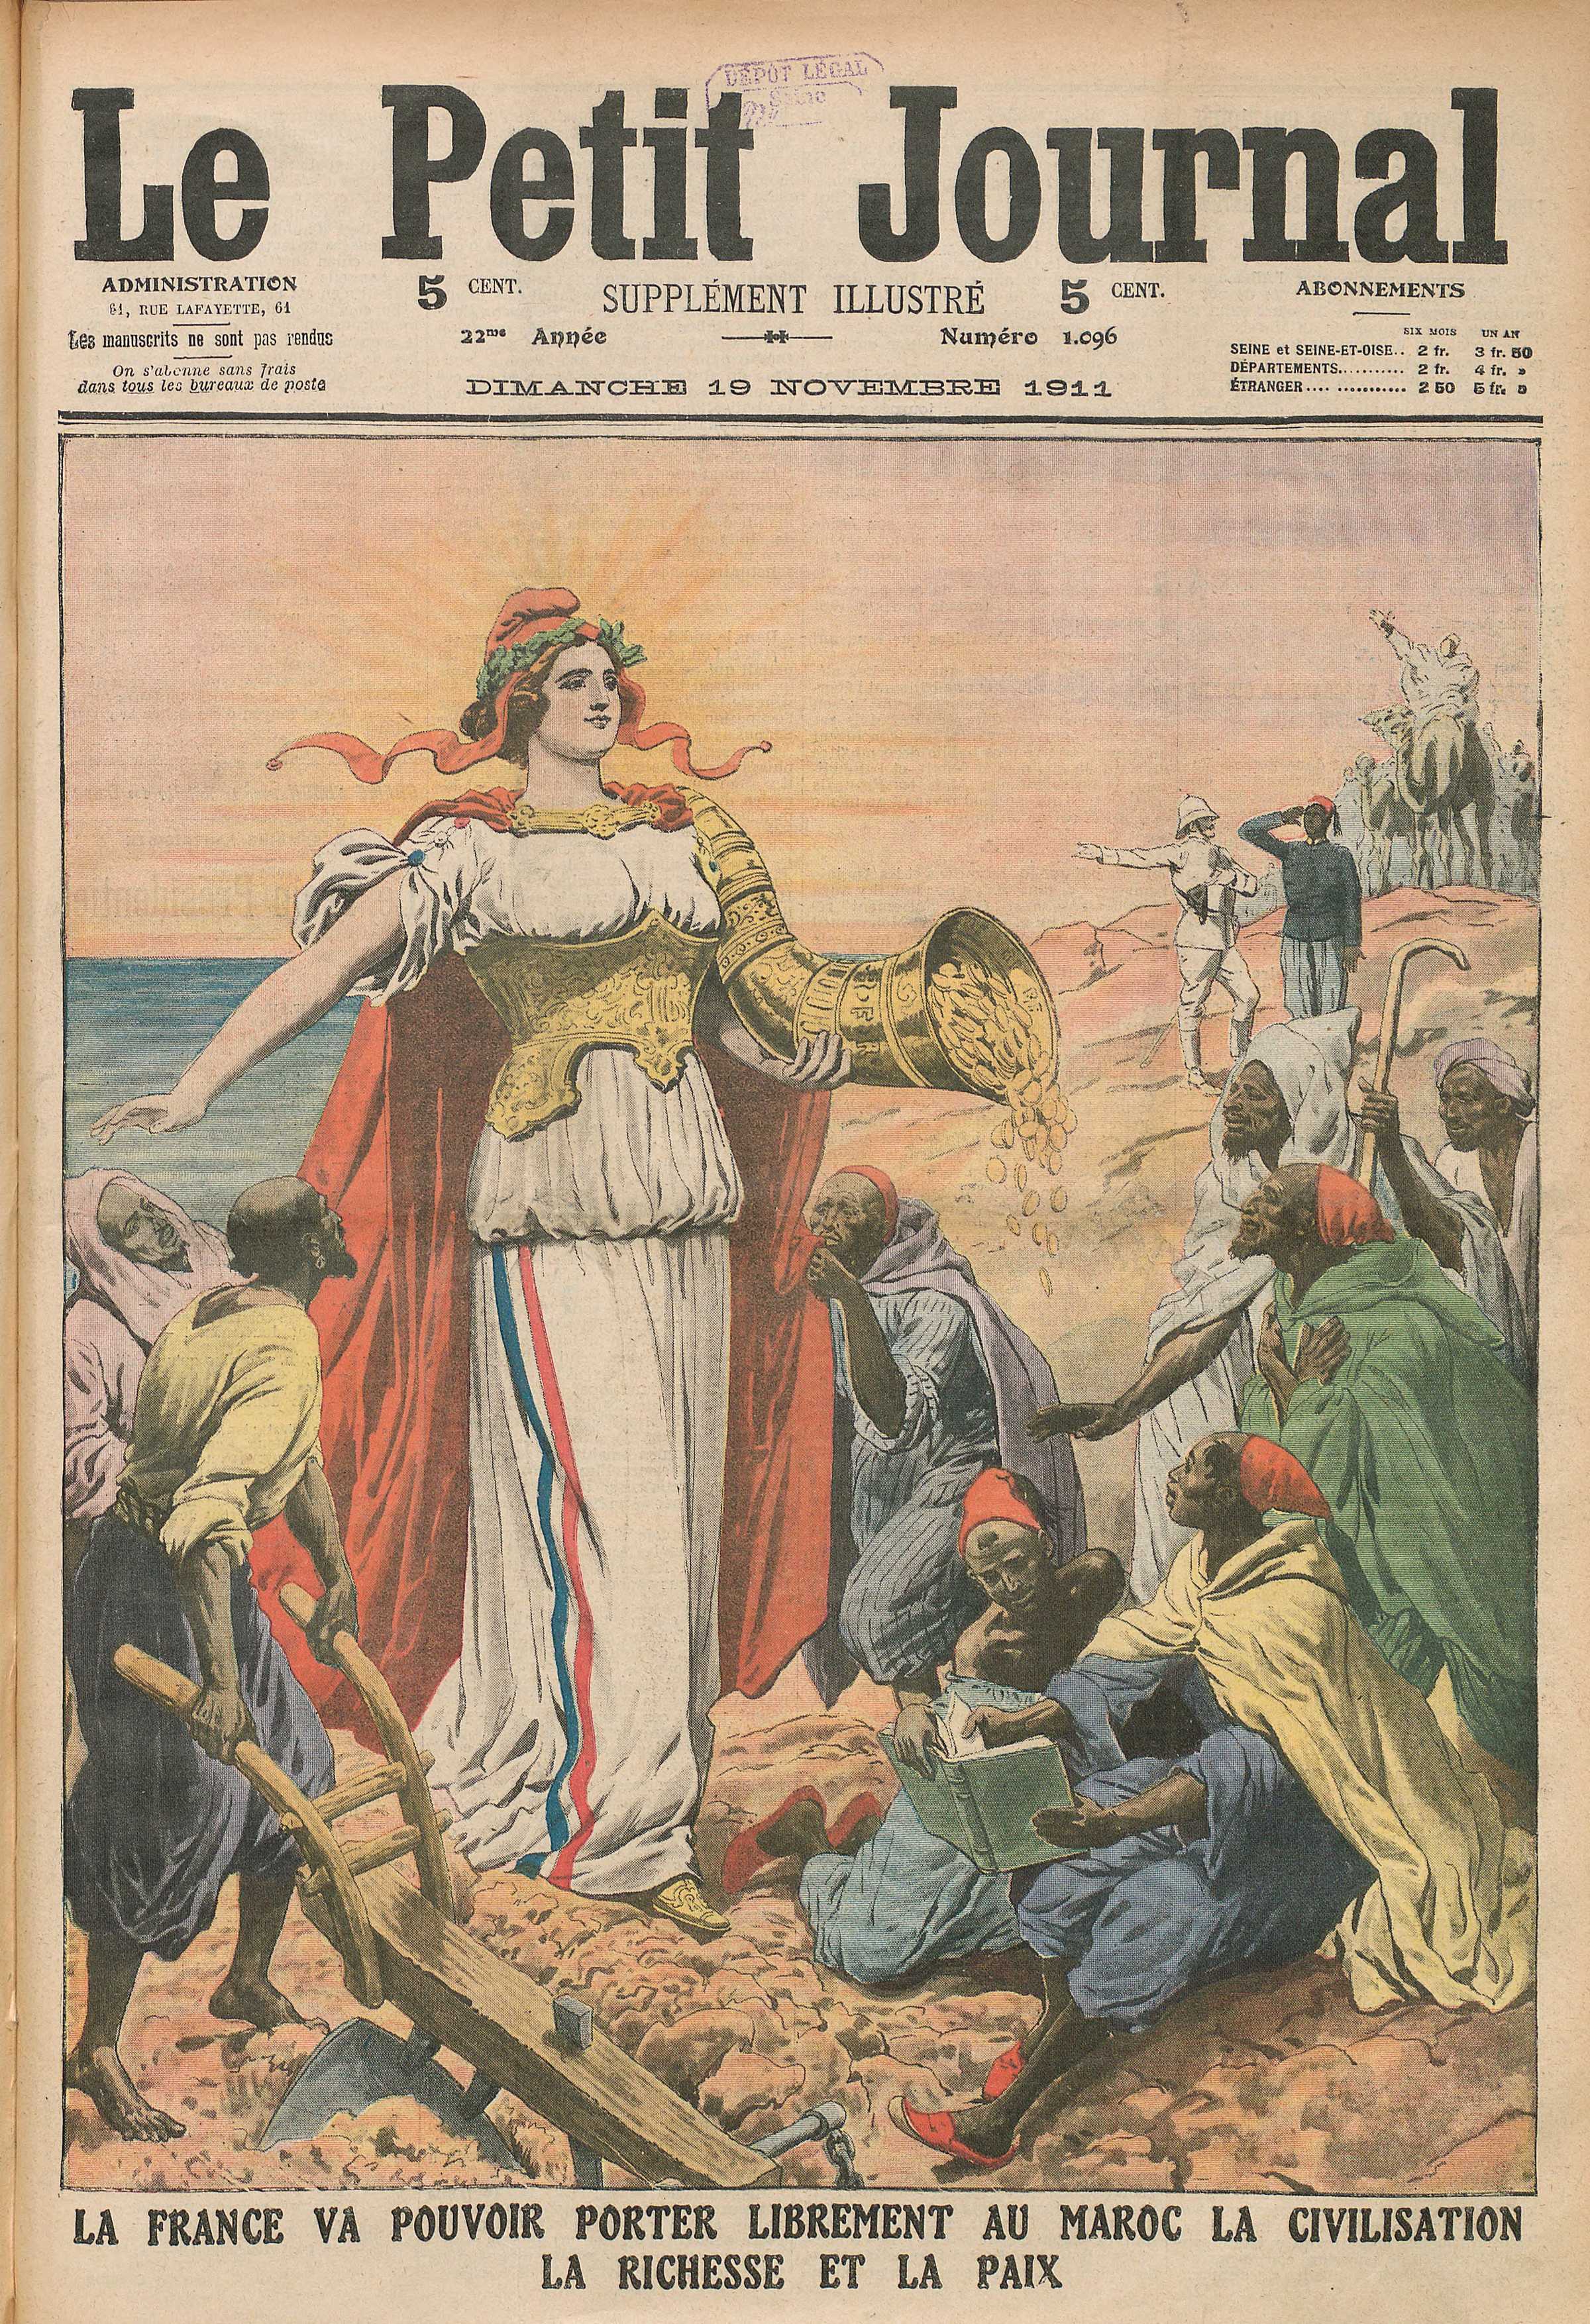 Le Petil Journal, 19 Nov 1911